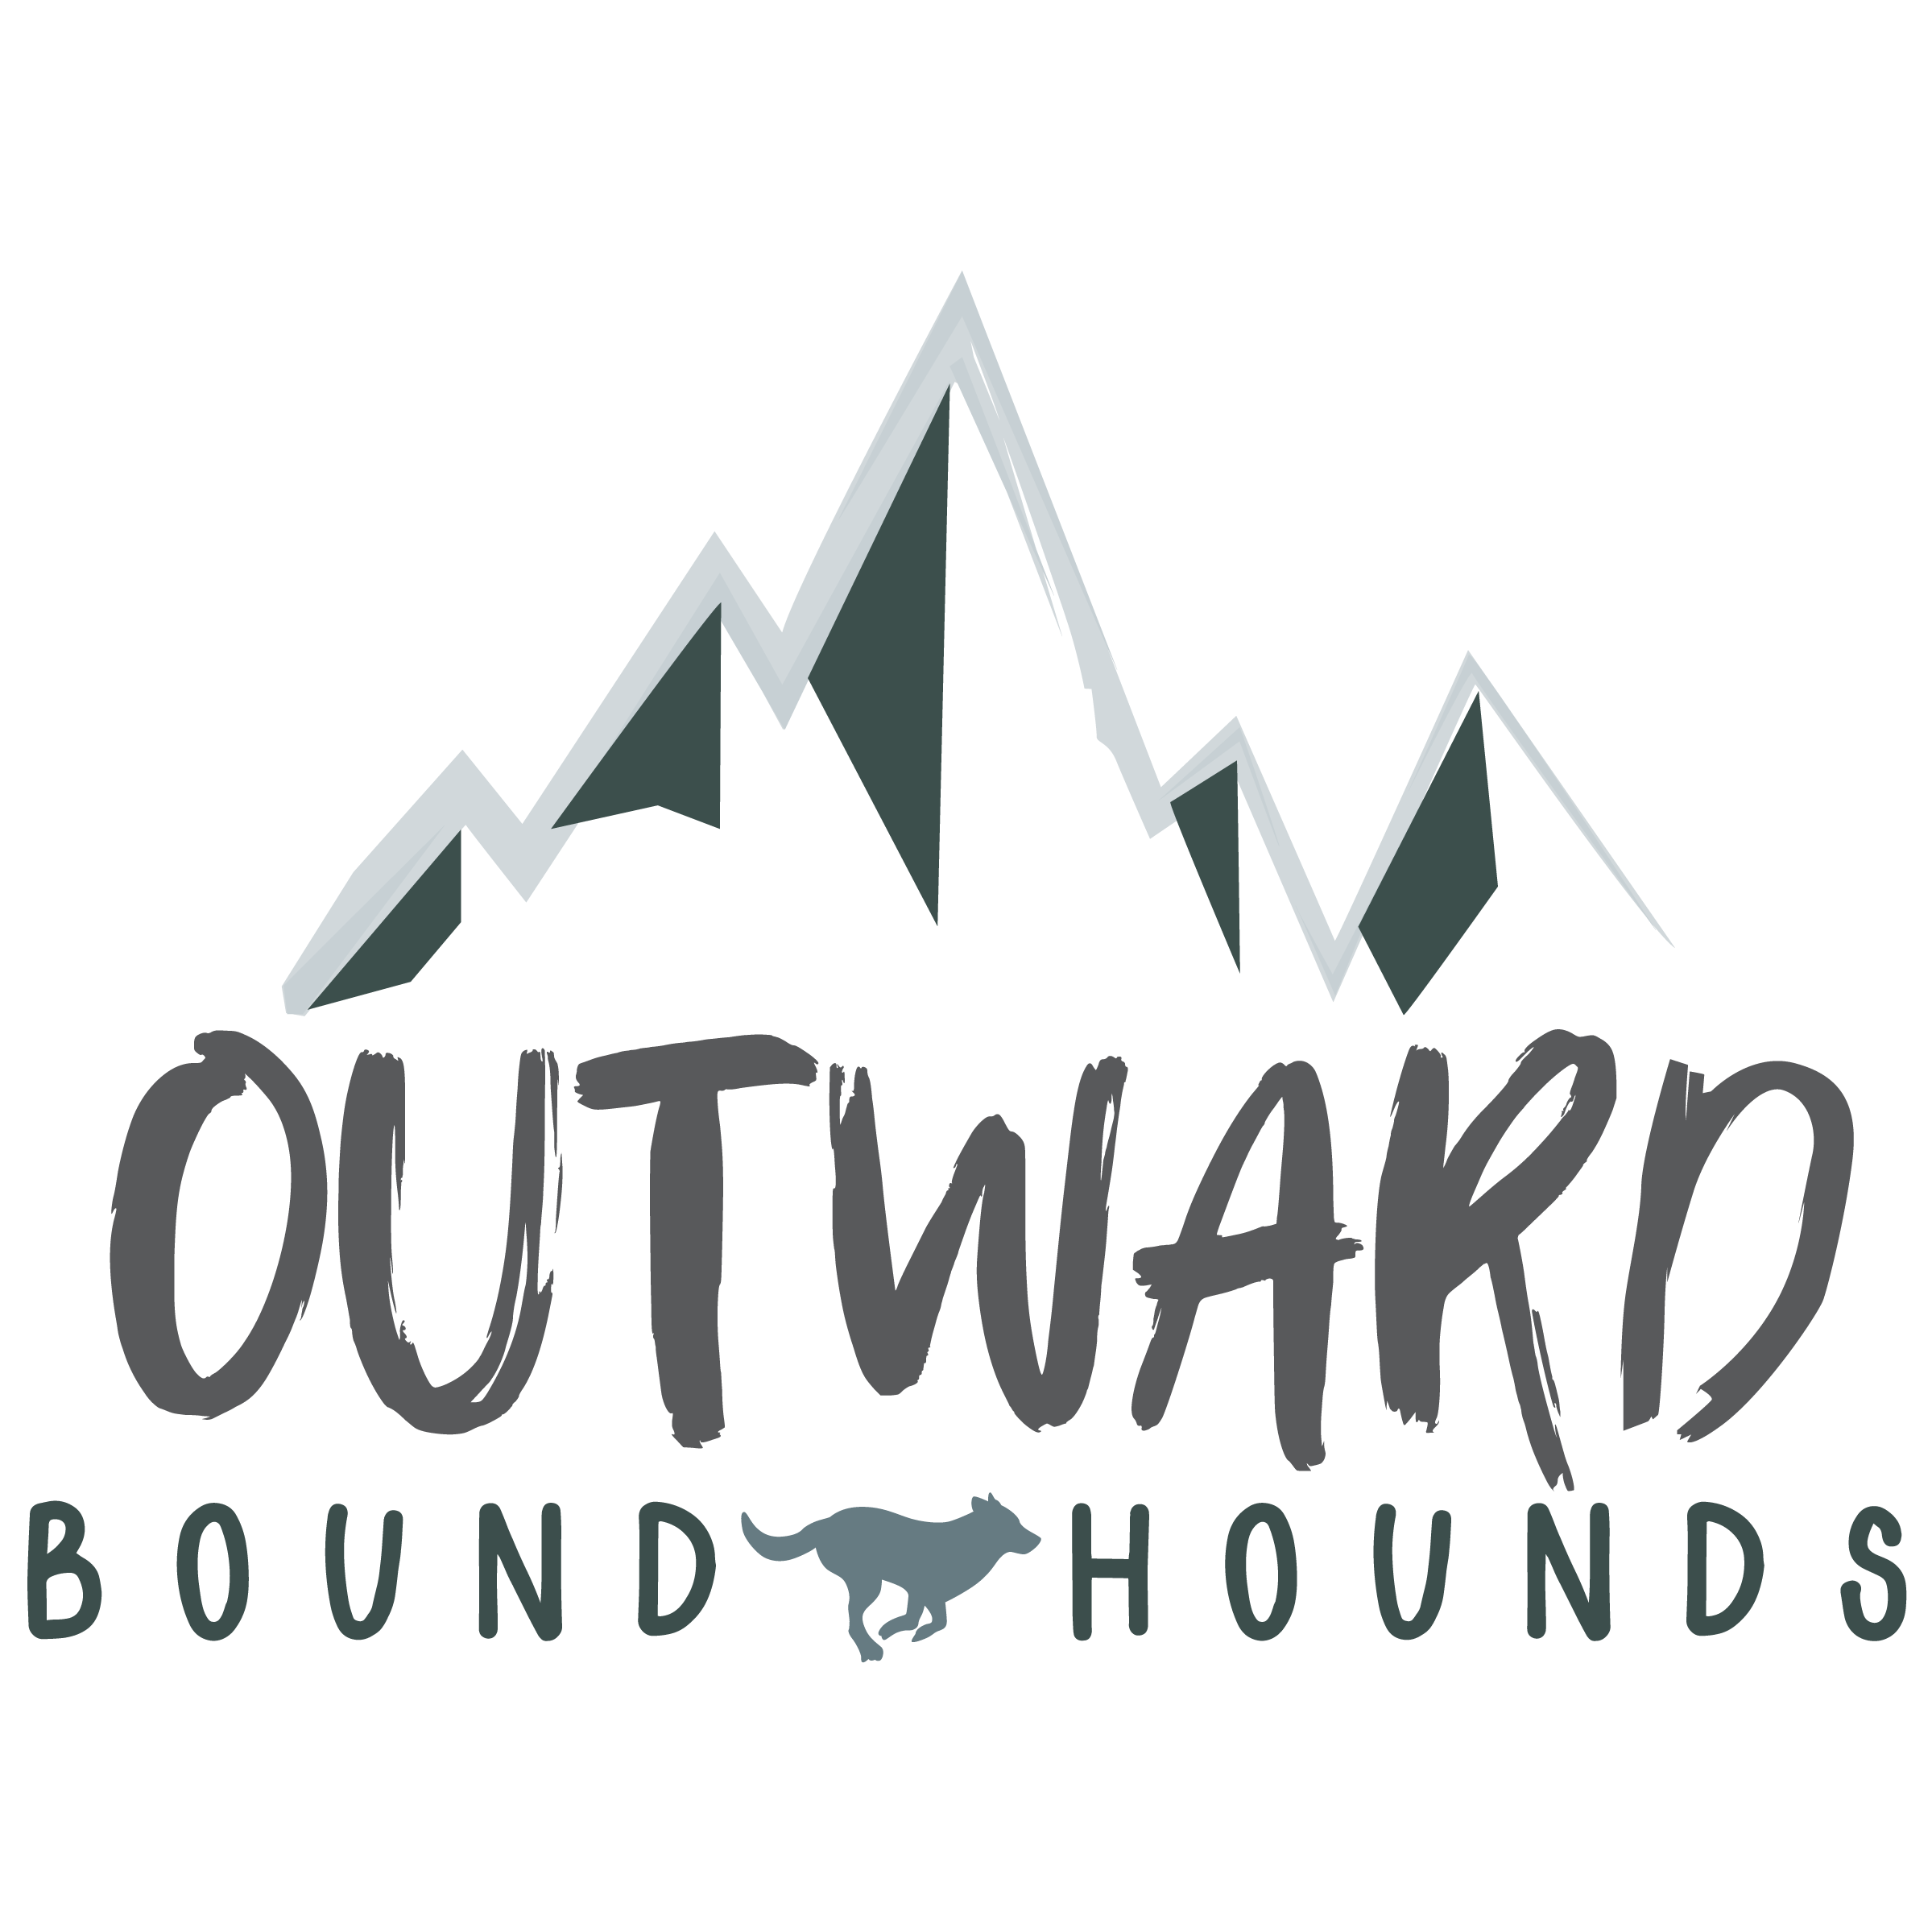  Outward Bound Hounds. - Montgomery County, MD  https://outwardboundhounds.com/ 